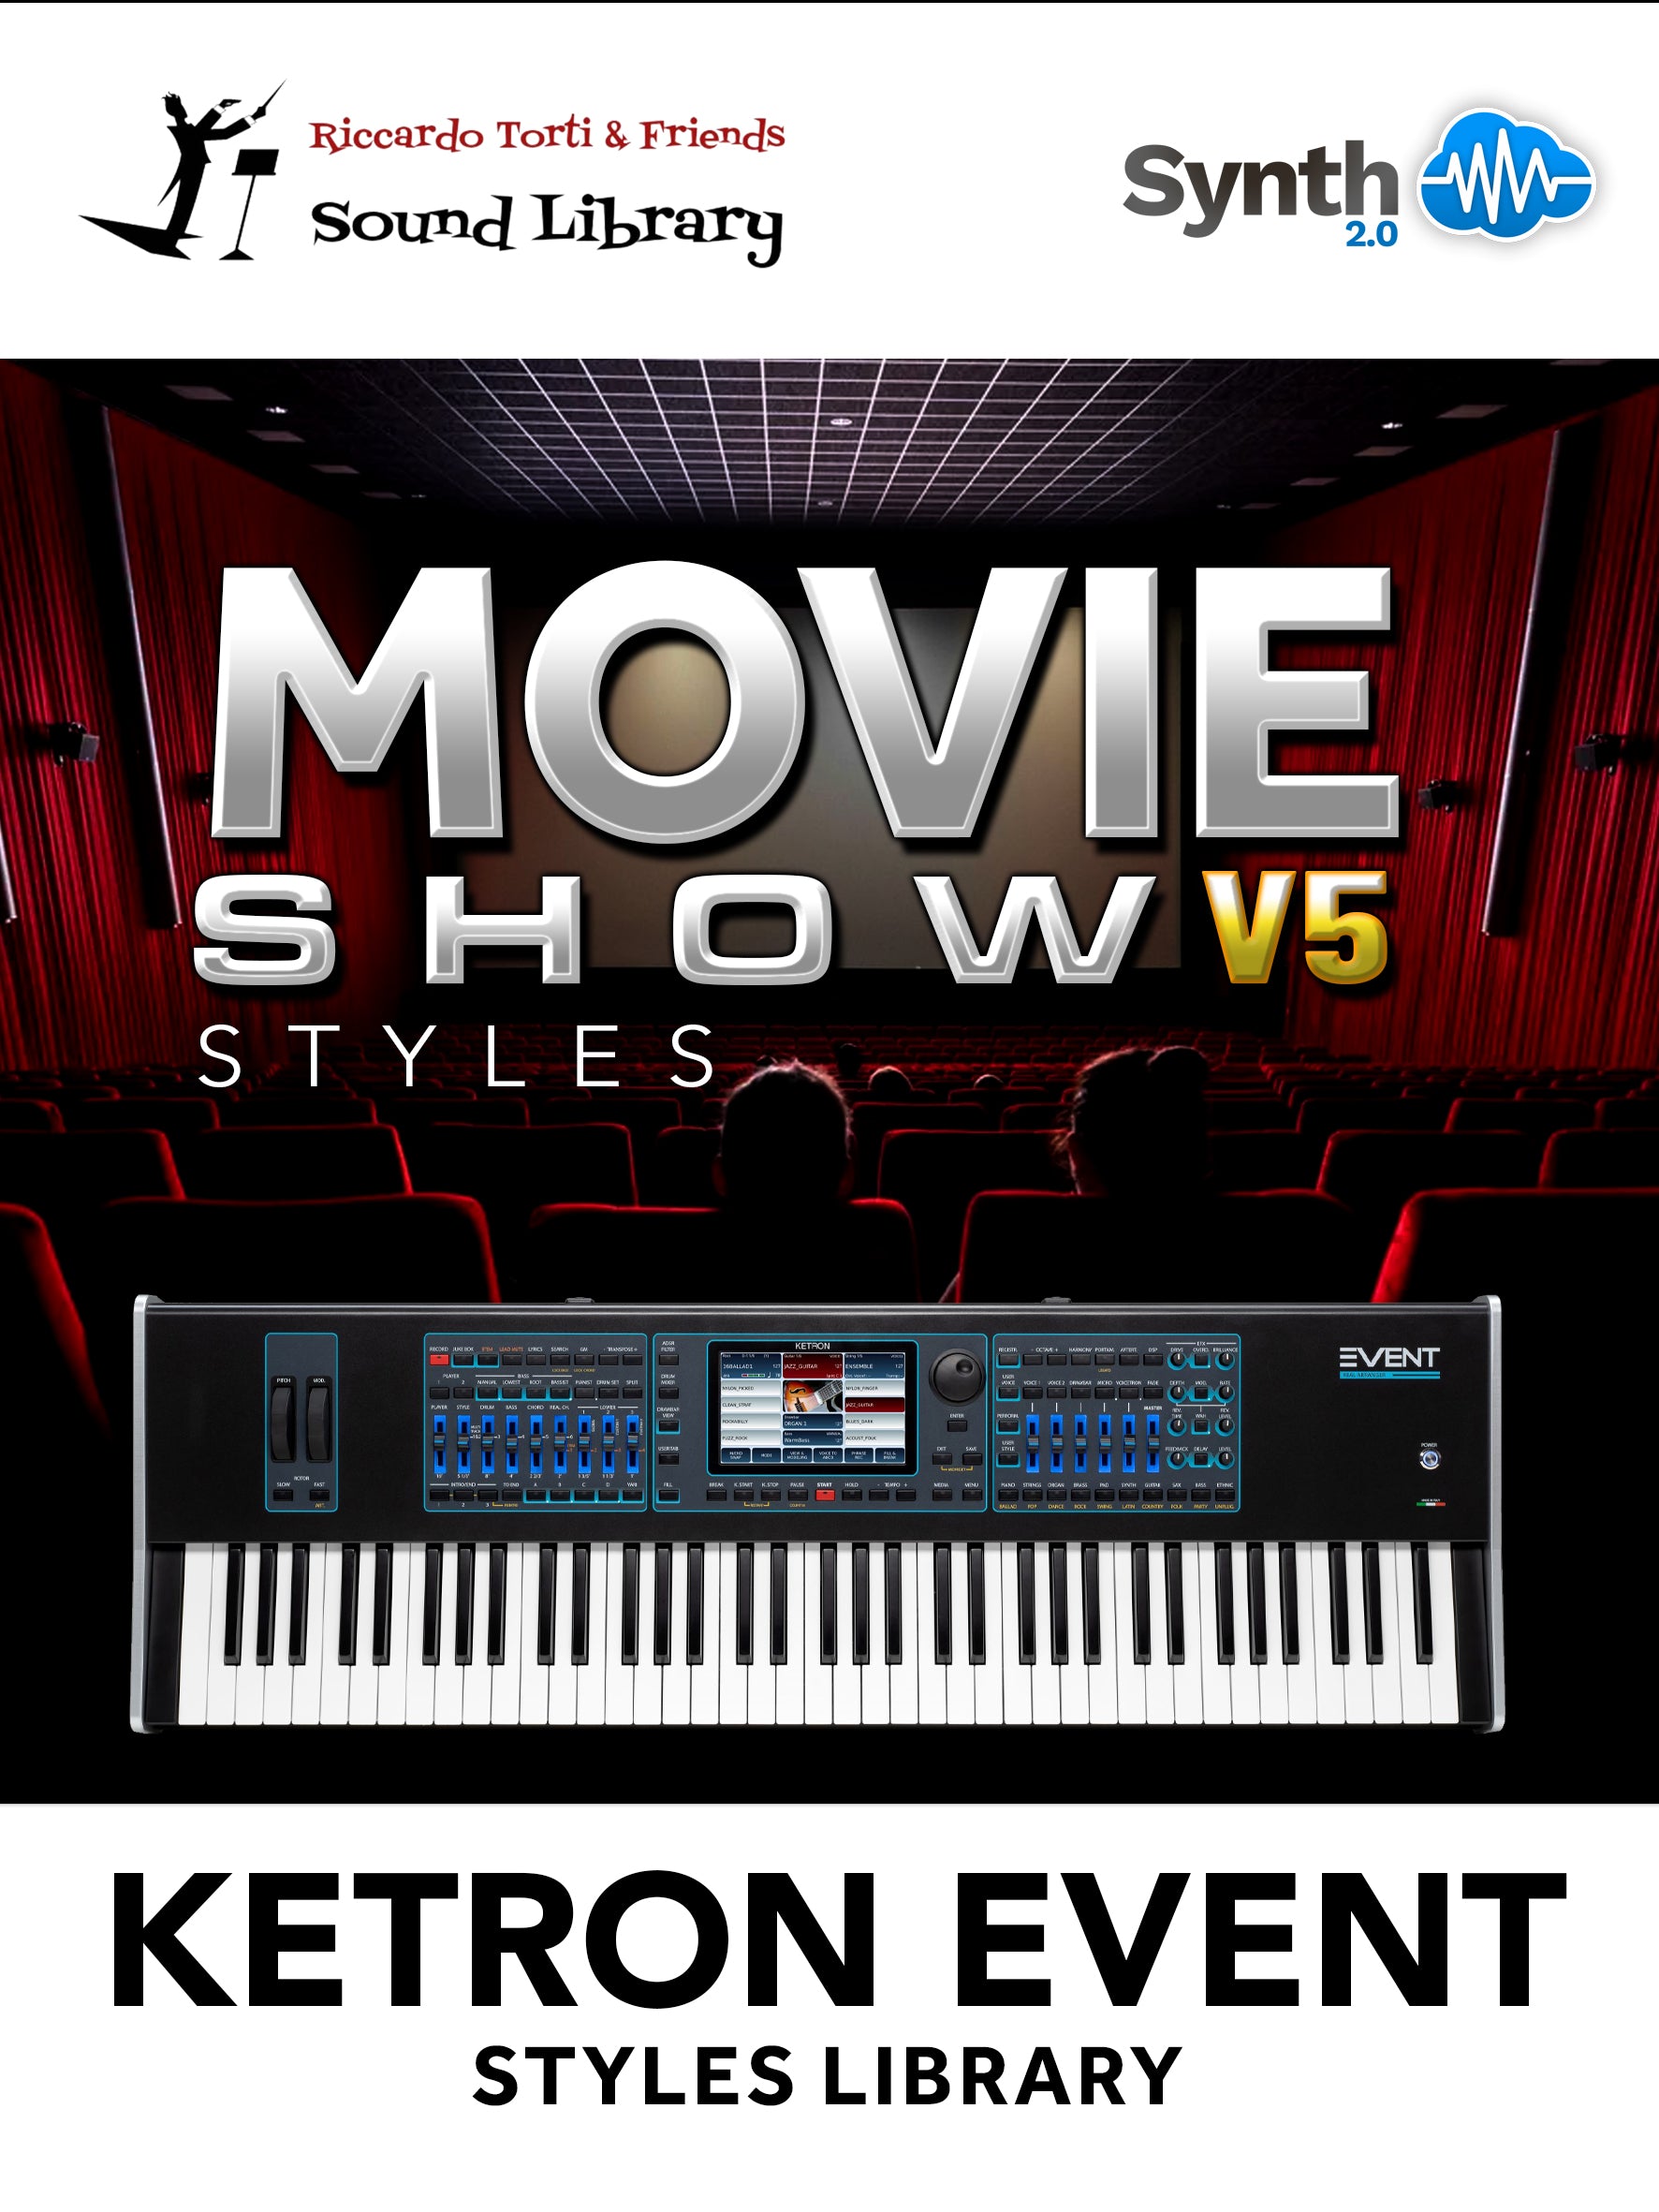 EVS005 - Movie Show V5 - Ketron Event ( 8 new styles )